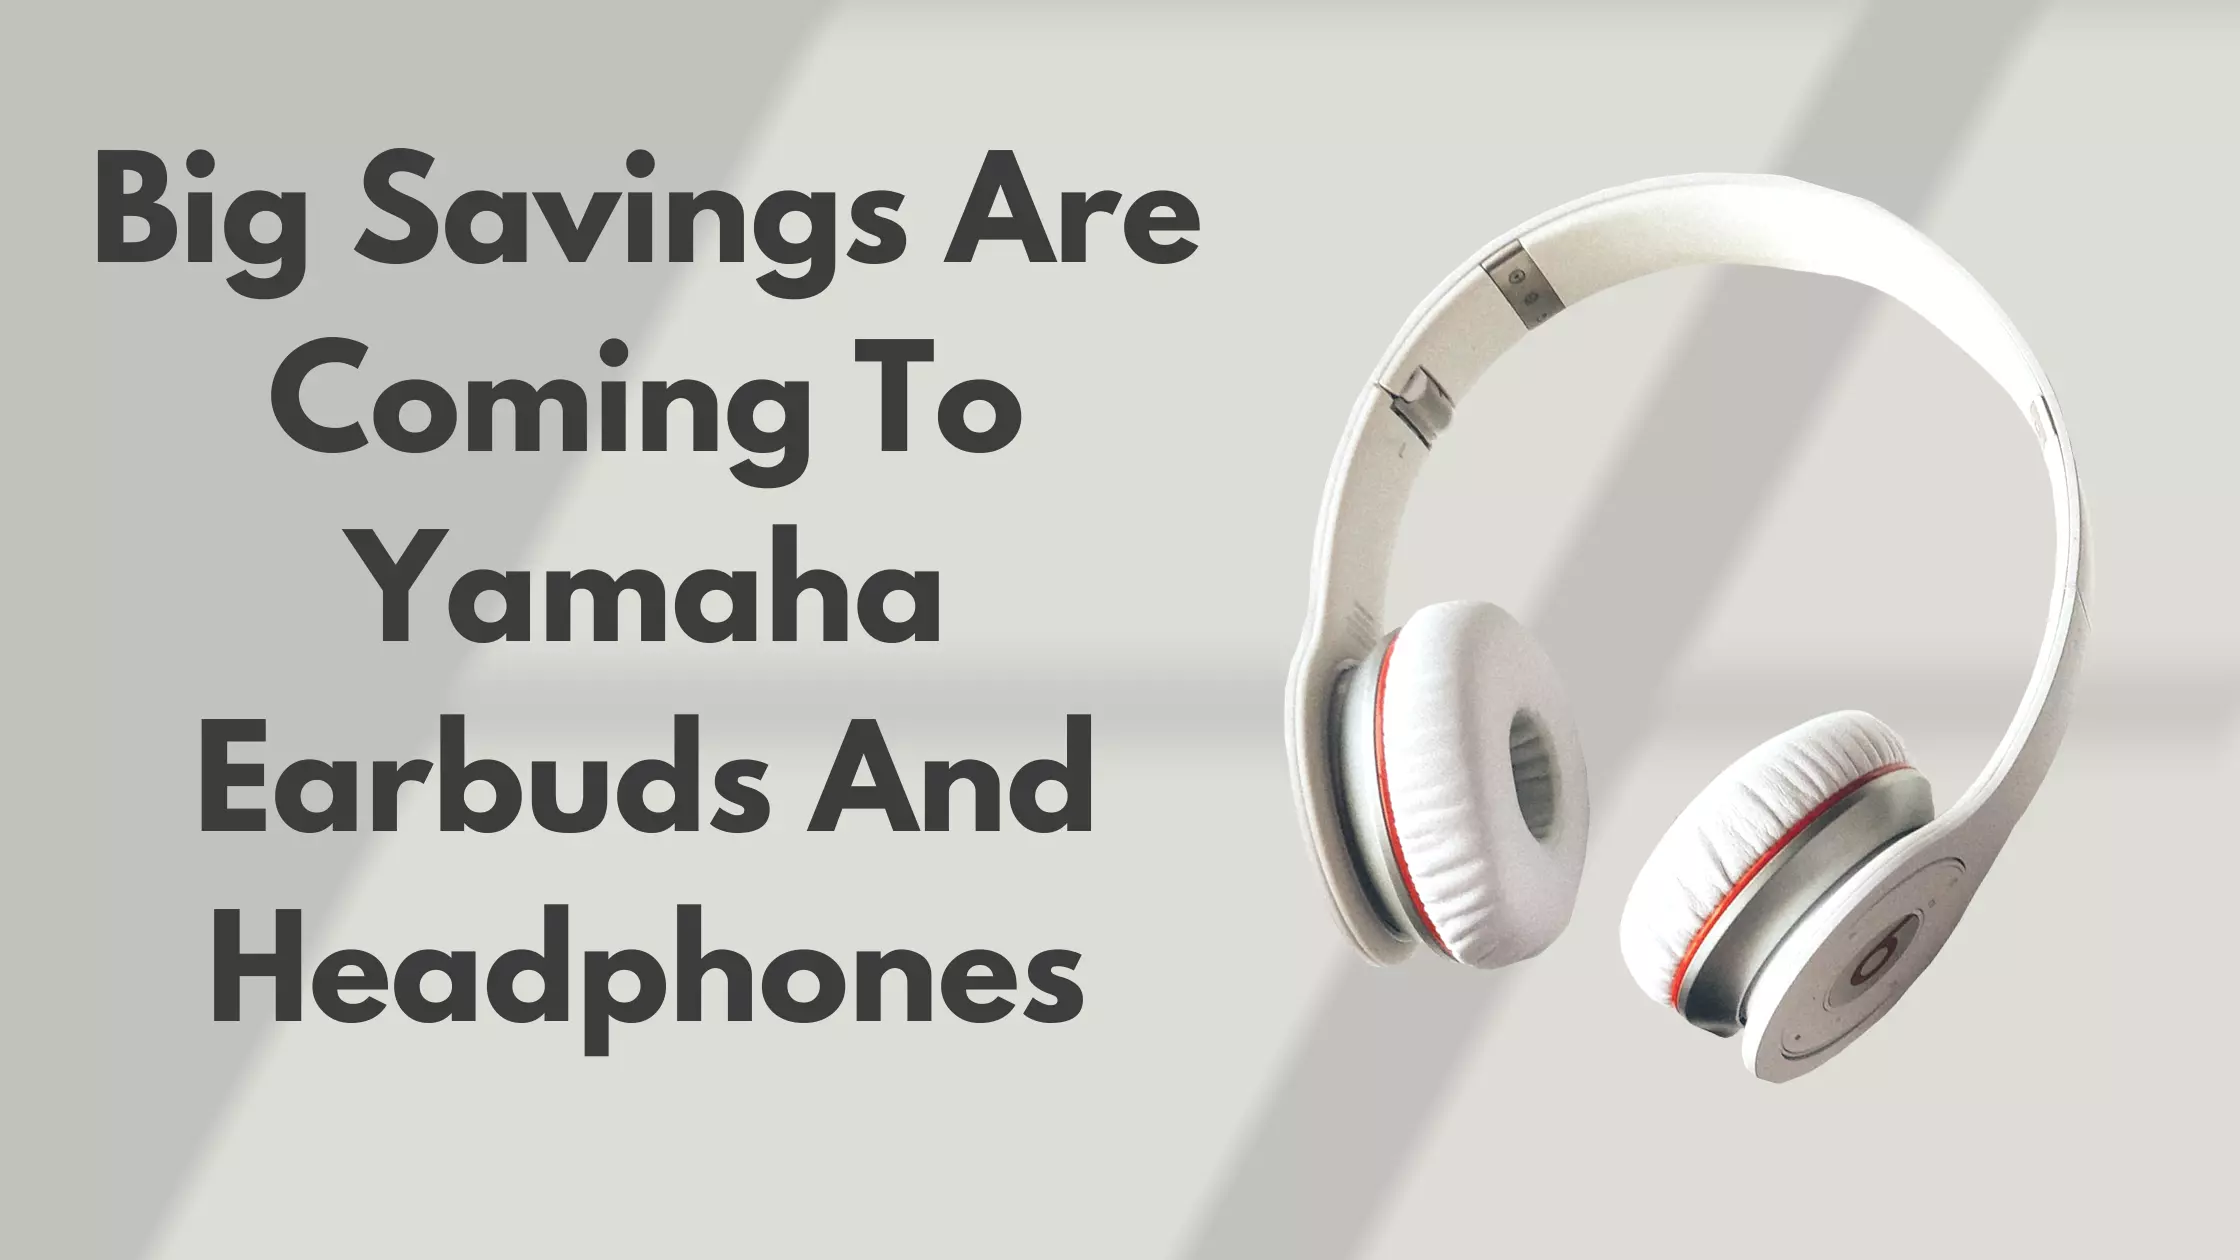 Big savings are coming to Yamaha earbuds and headphones